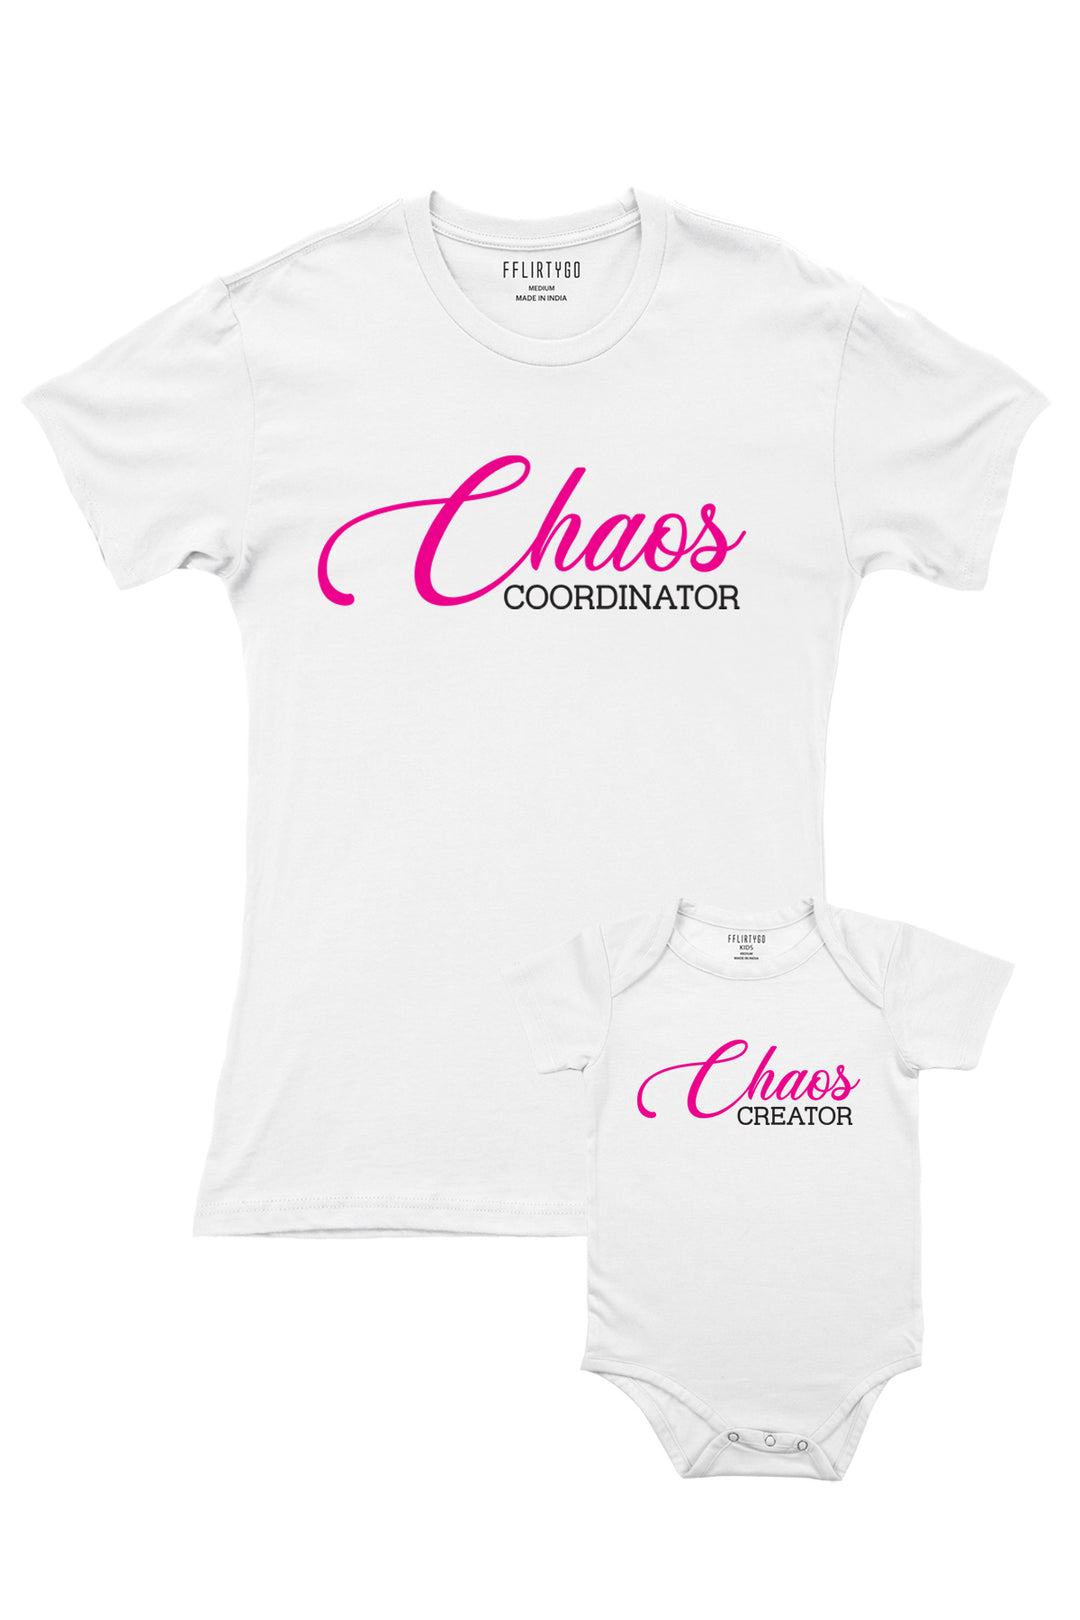 Chaos Creator and Coordinator